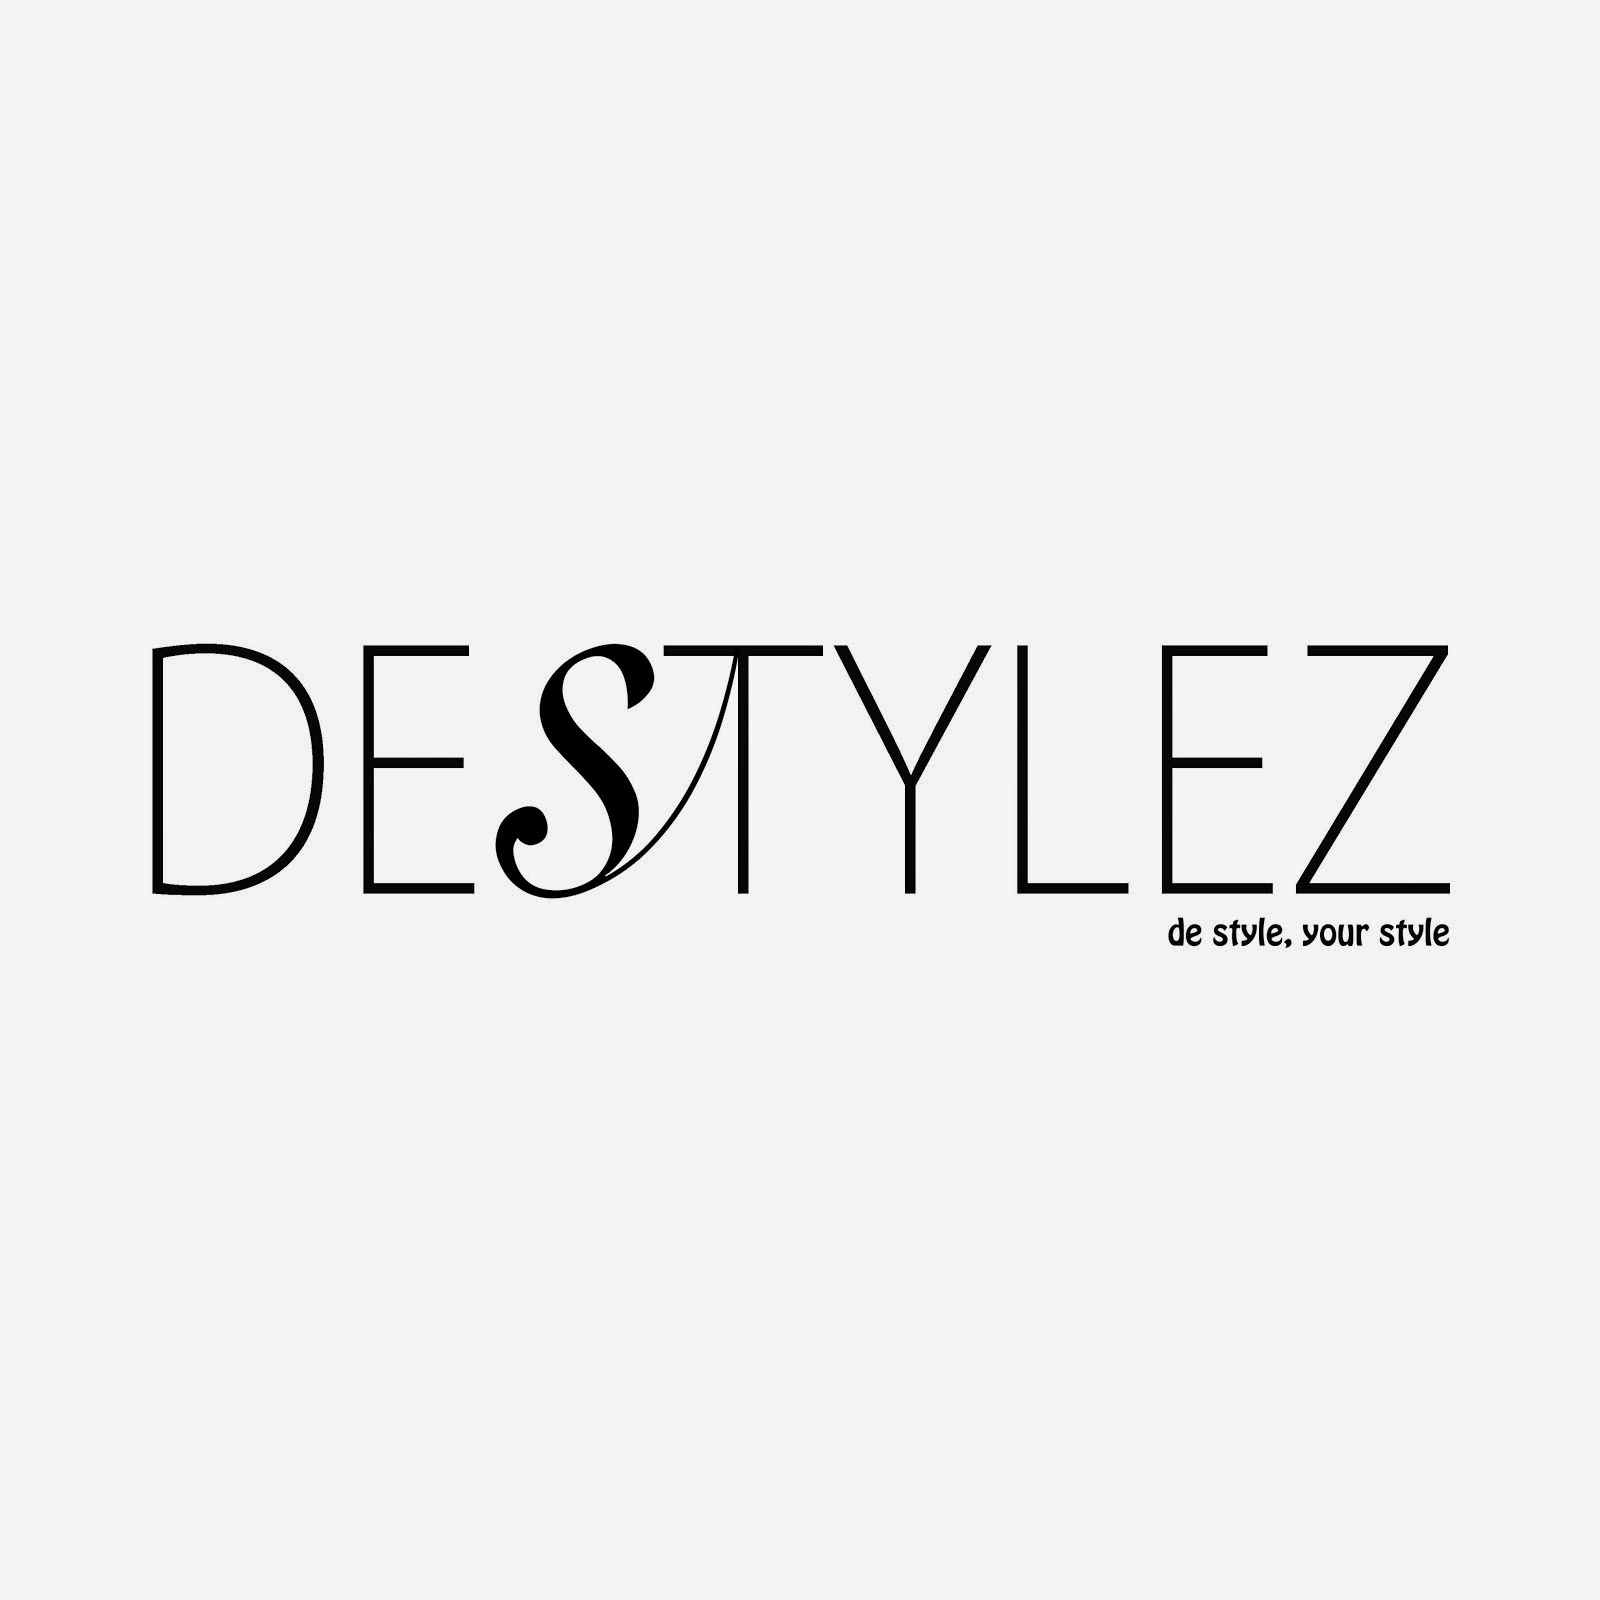 Co-Founder of DeStylez | Online Fashion Store